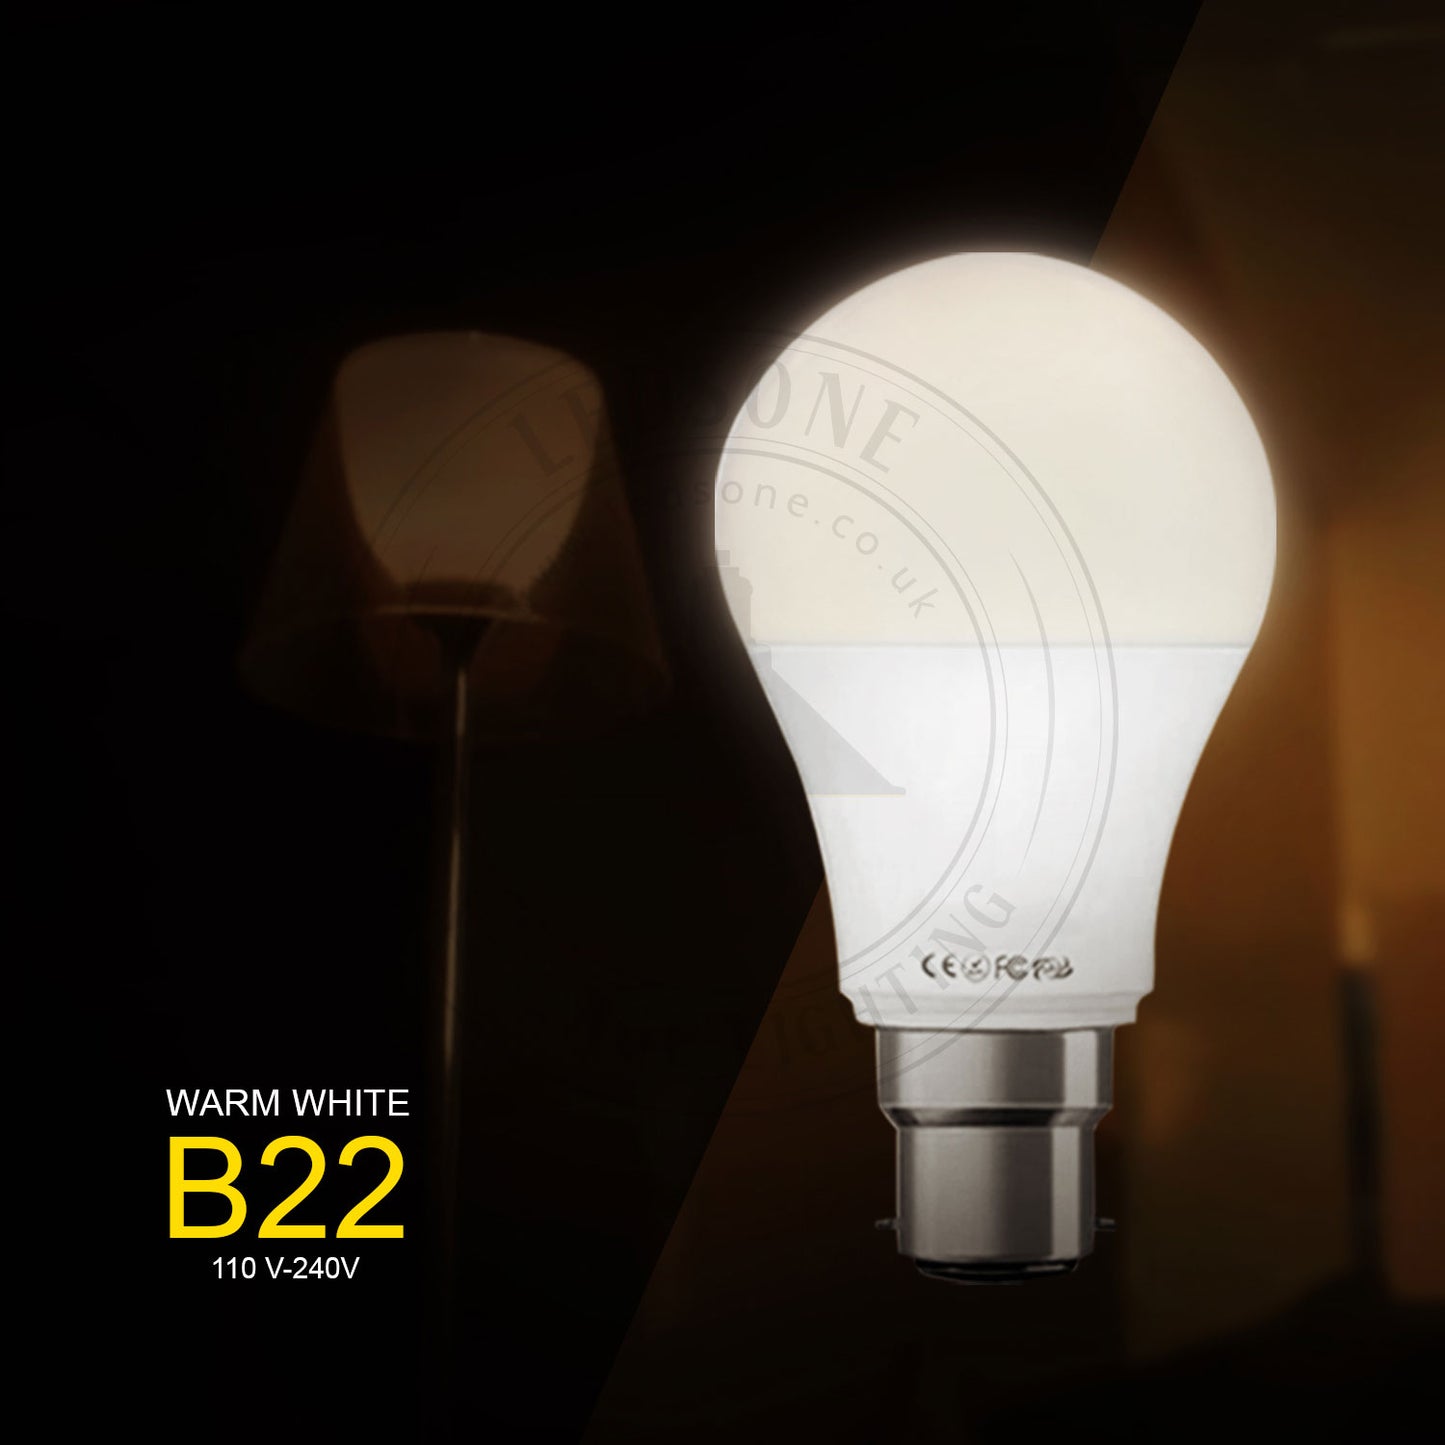 18W B22 Light Bulb Energy Saving Lamp Warm White Globe~3000